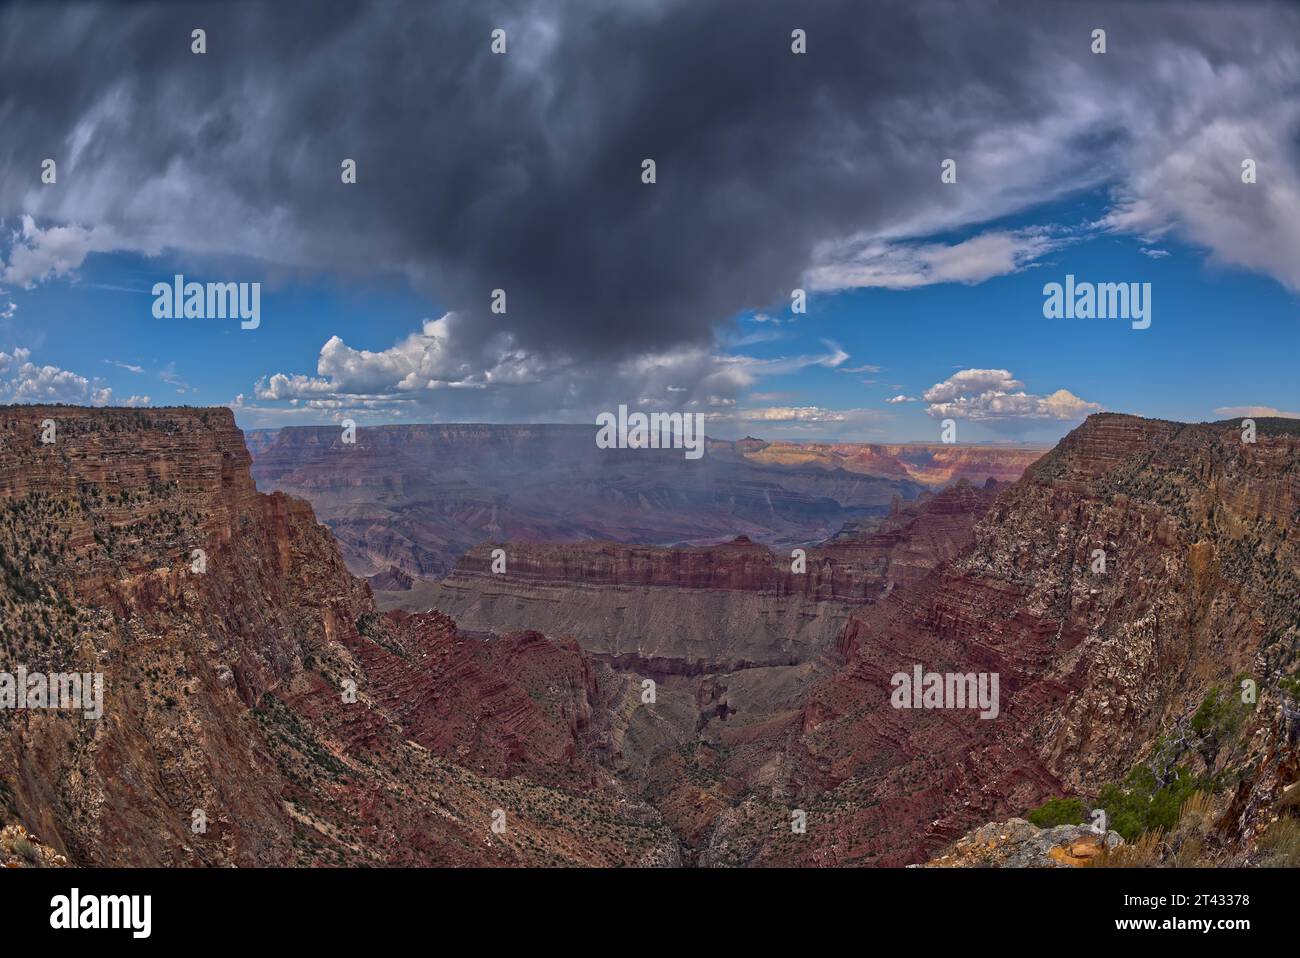 Storm viewed from No Name Point, Grand Canyon National Park, Arizona, USA Stock Photo